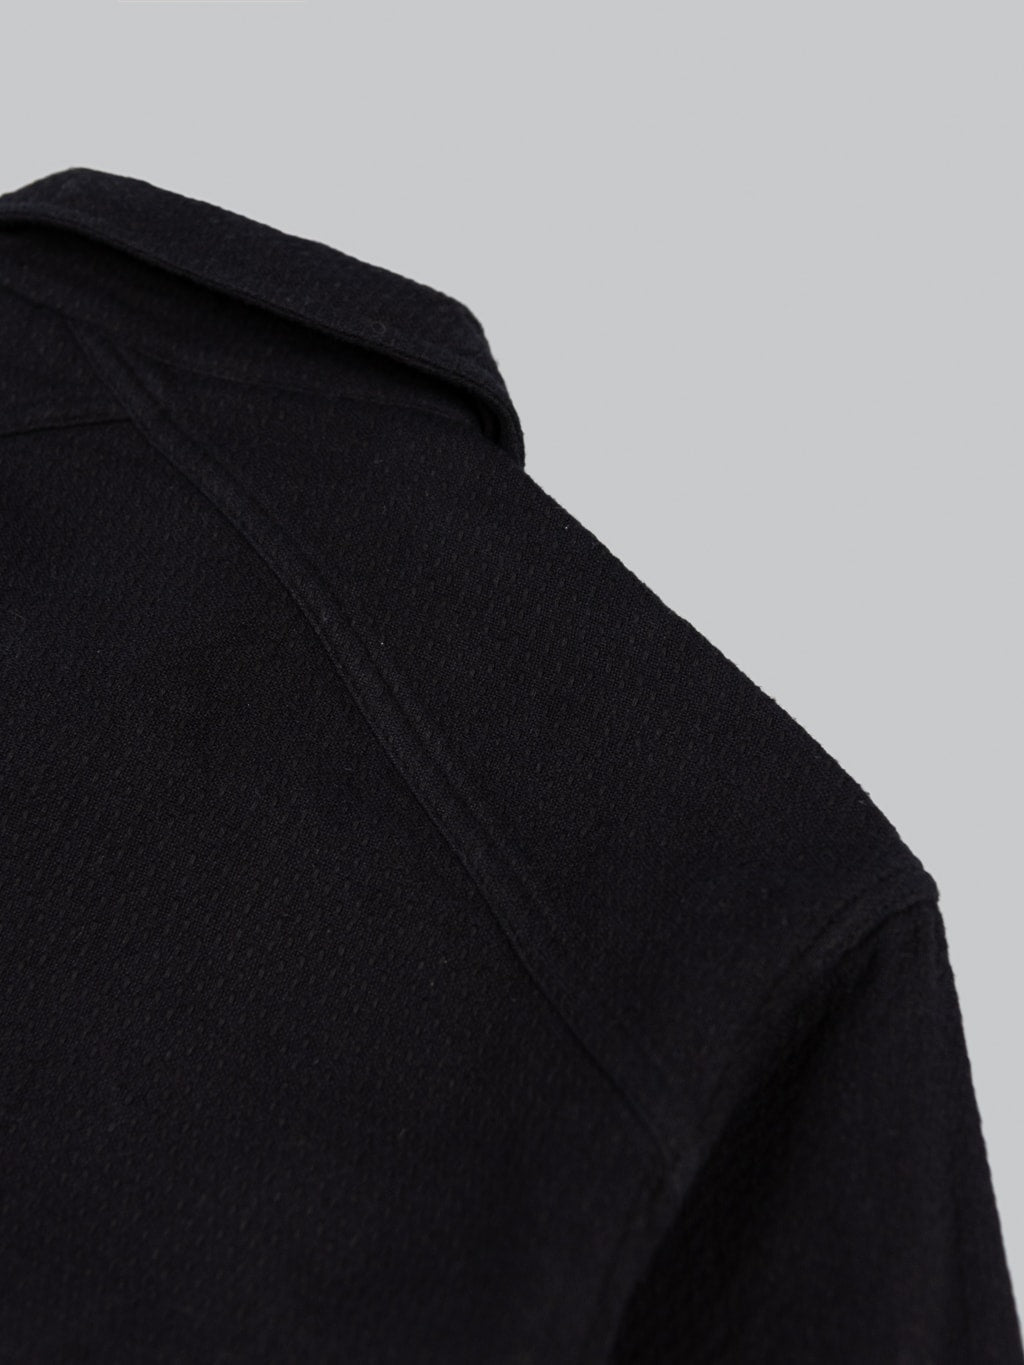 3sixteen CPO Shirt black Sashiko stitchin